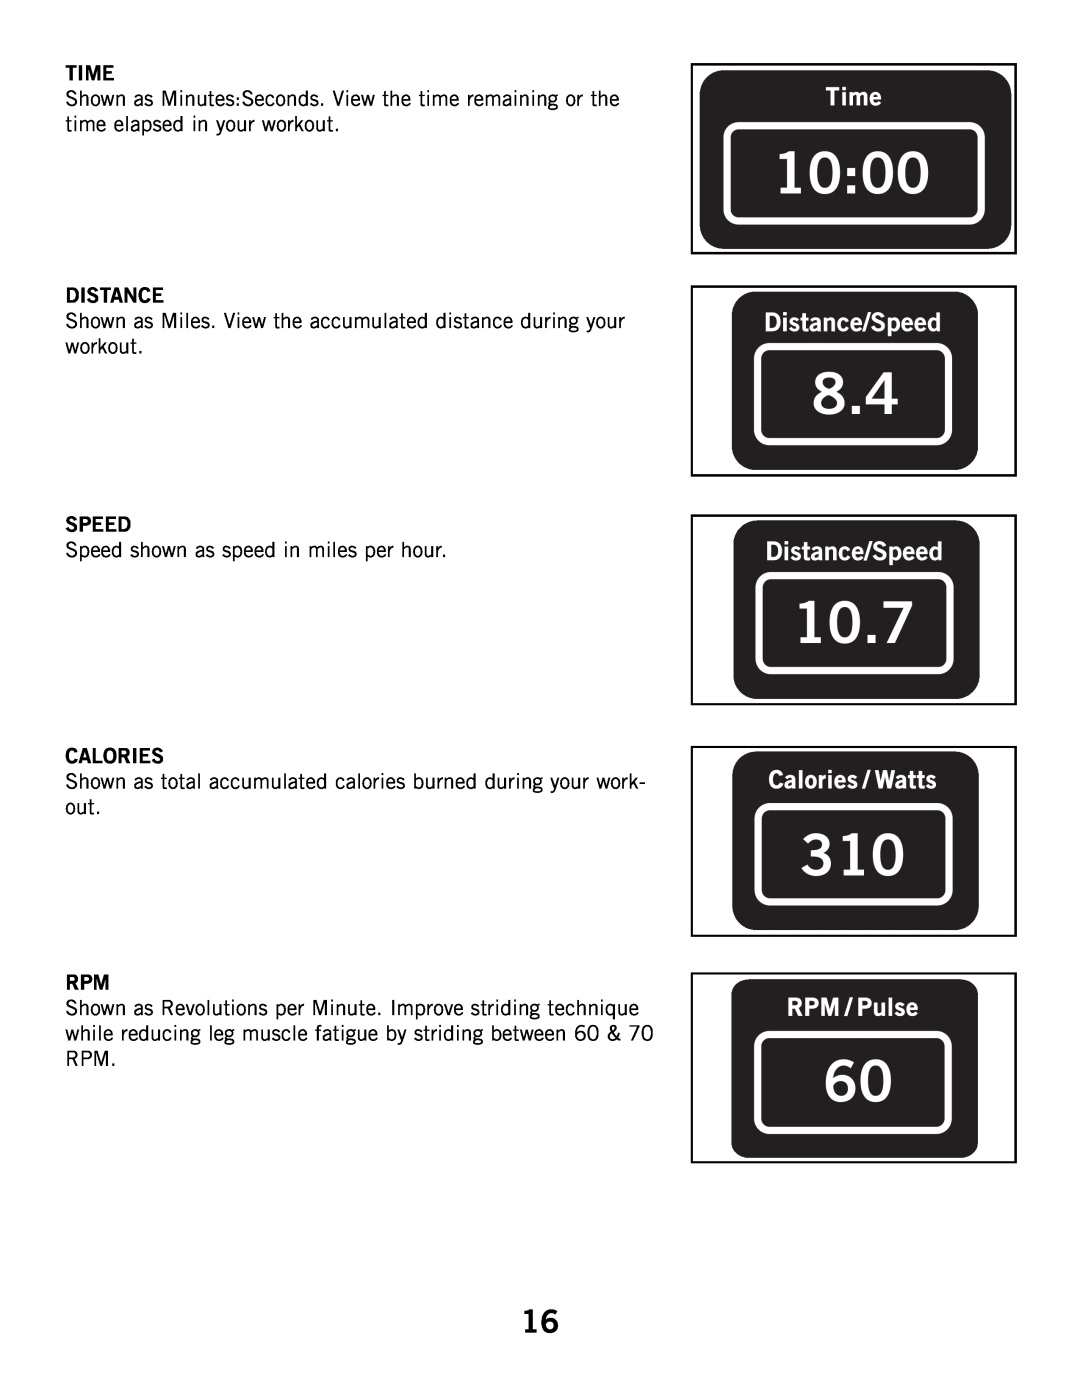 Horizon Fitness 3.1B, 2.1B manual 1000, 10.7 310, Distance/Speed 